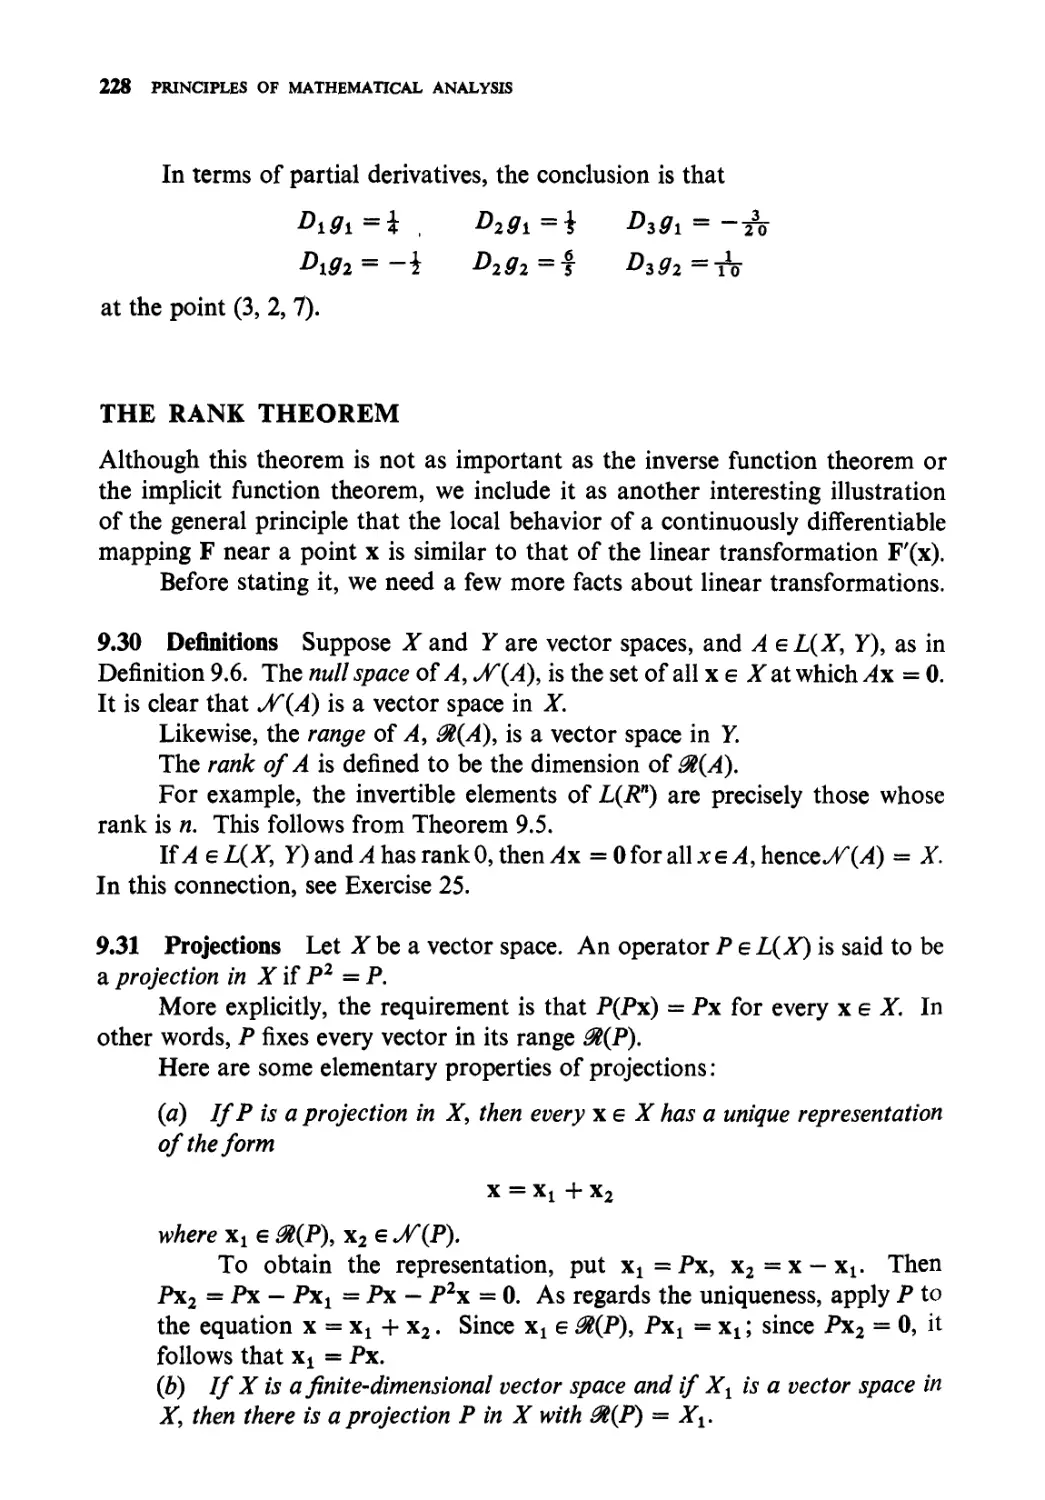 The rank theorem